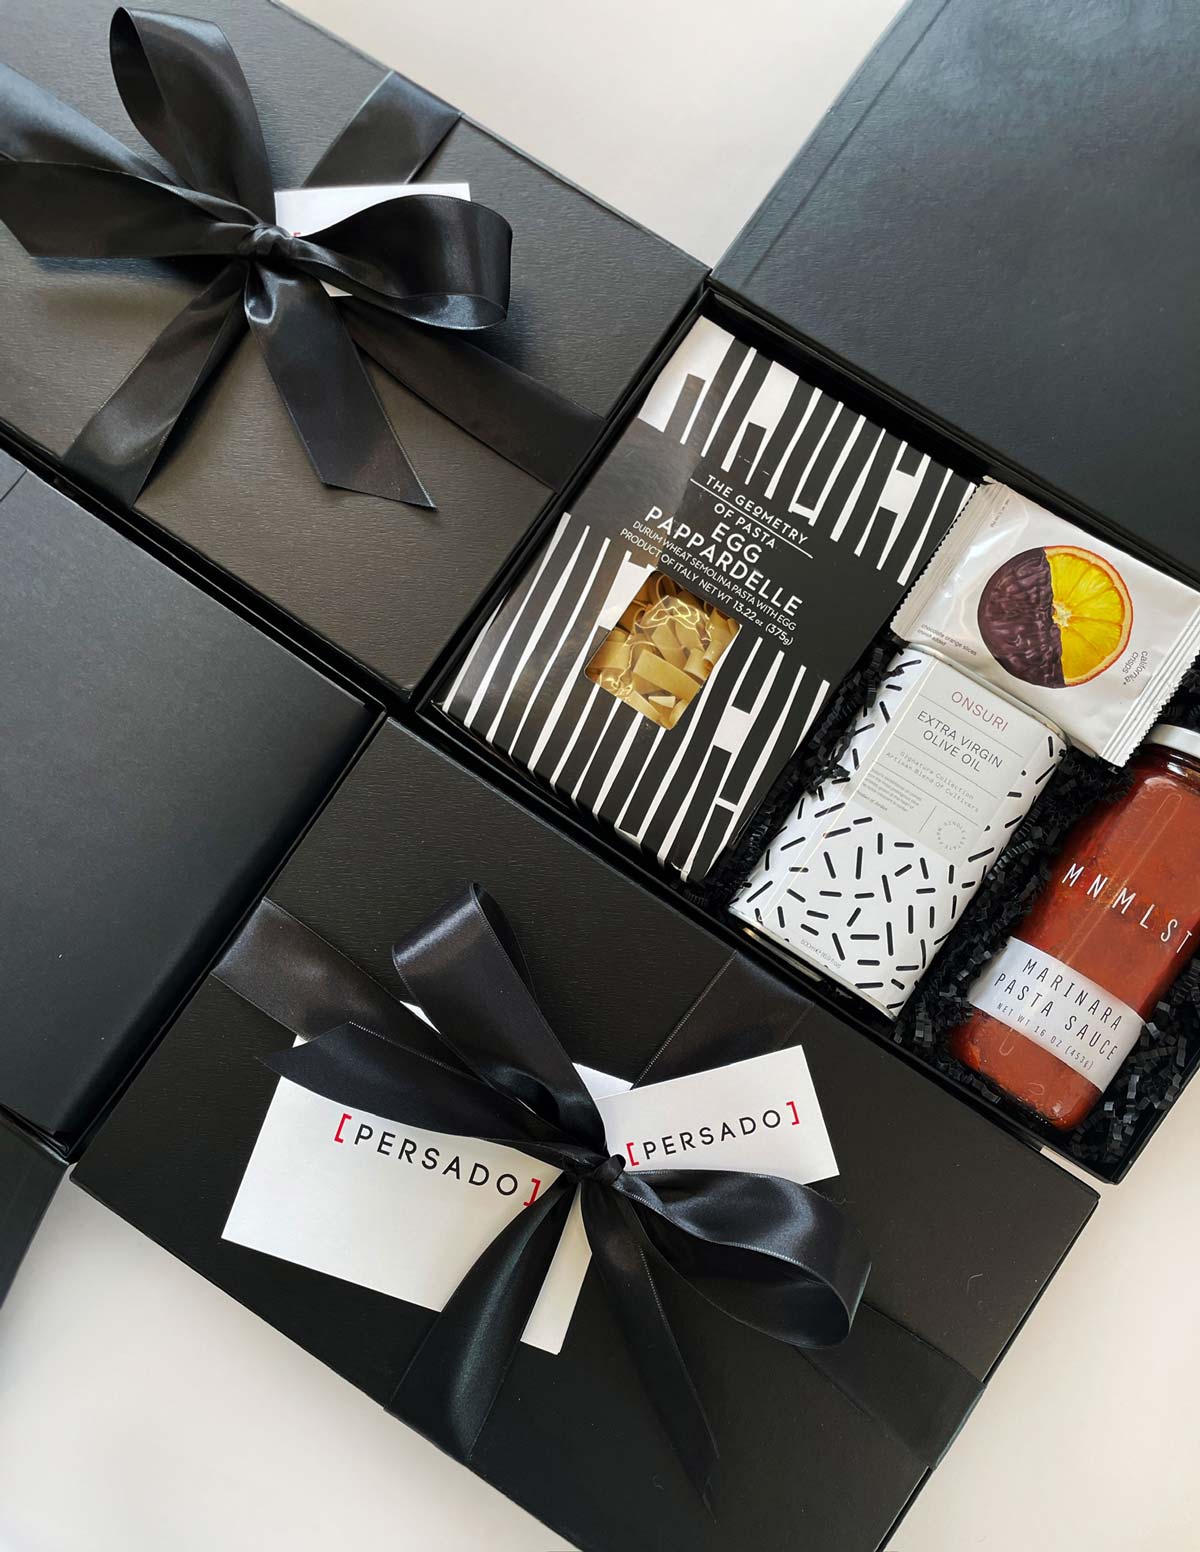 custom corporate gift boxes for persado, including pasta box, olive oil, pasta sauce, crispy chocolate orange slice and more